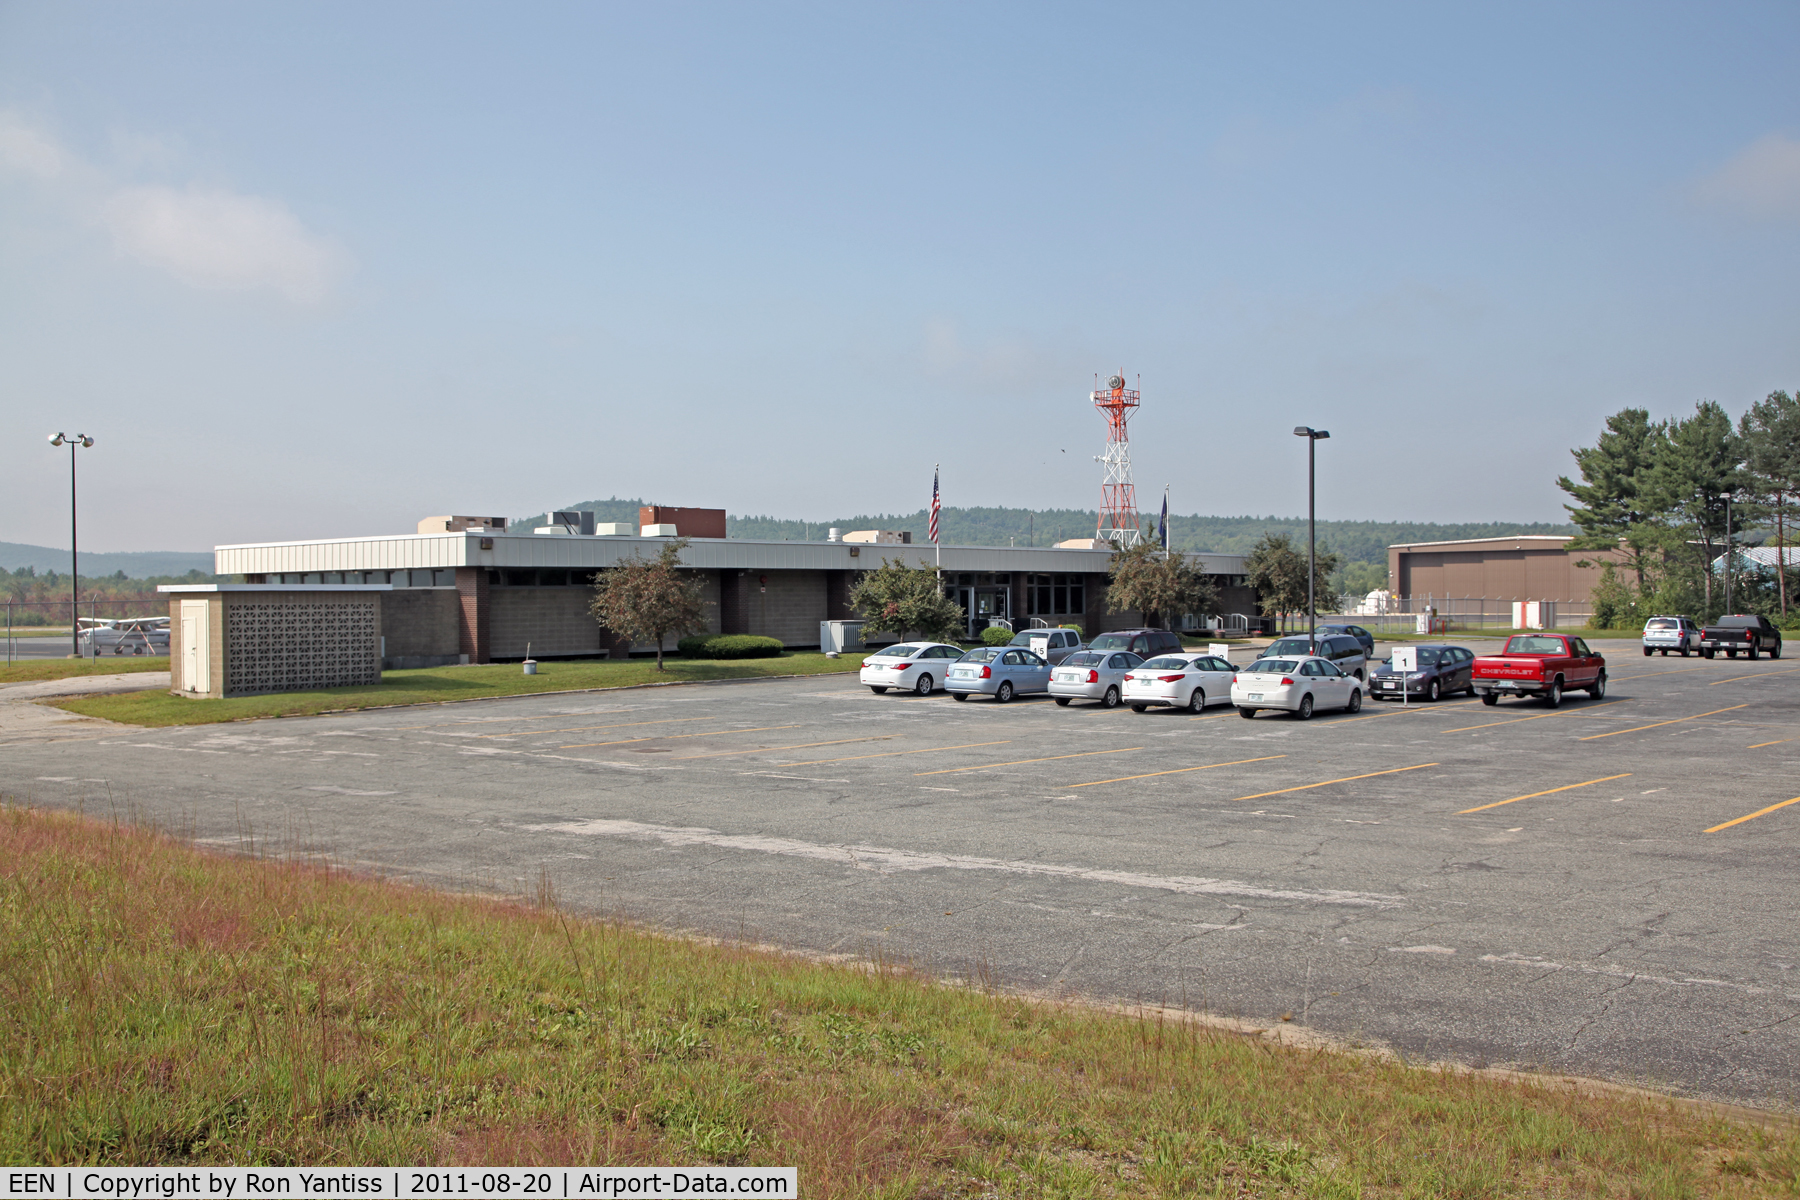 Dillant-hopkins Airport (EEN) - Terminal and parking area at Dillant-Hopkins Airport, Keene, NH